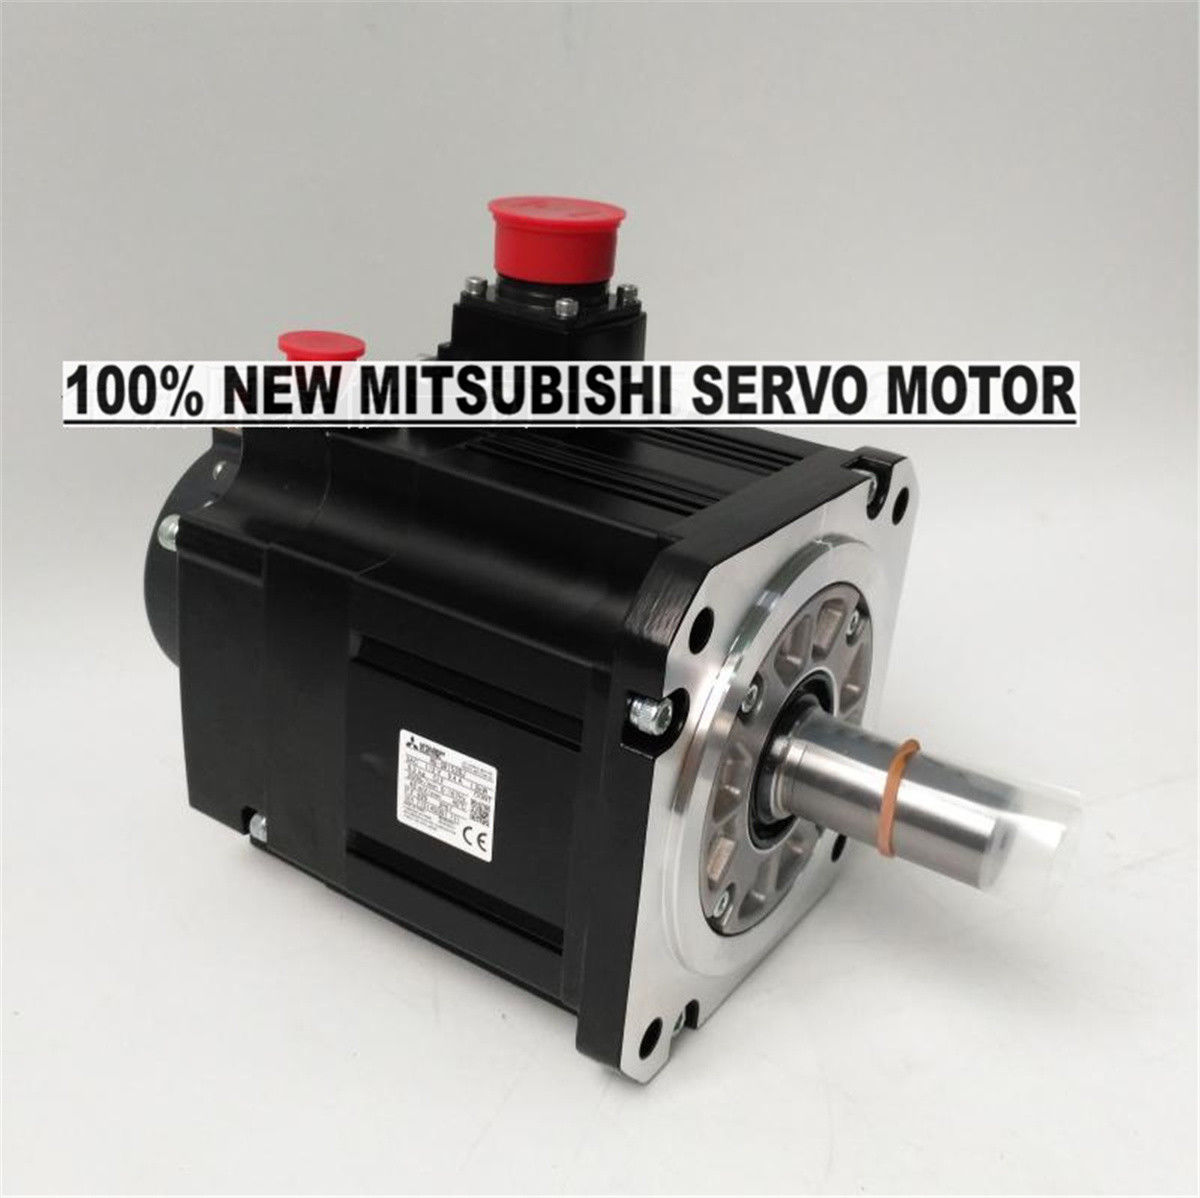 NEW Mitsubishi Servo Motor HG-SR152BJ in box HGSR152BJ - Click Image to Close